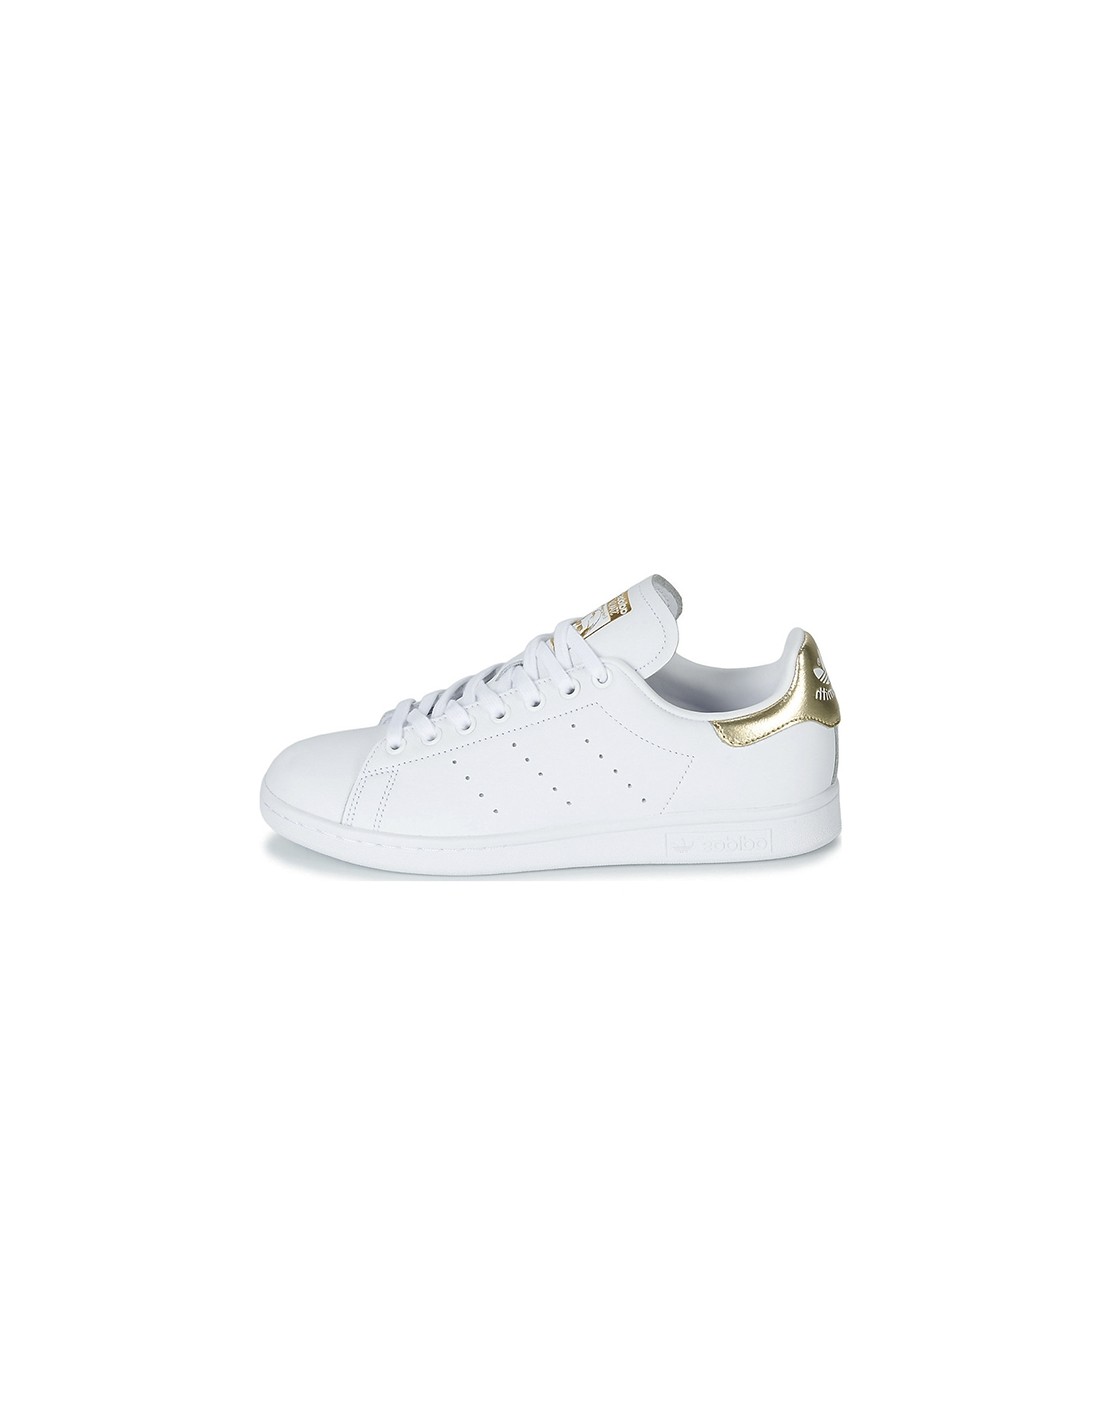 Prestige benzine Wreedheid Adidas Stan Smith Women's Shoes -White/Gold (EE8836)| urbanfashion.gr